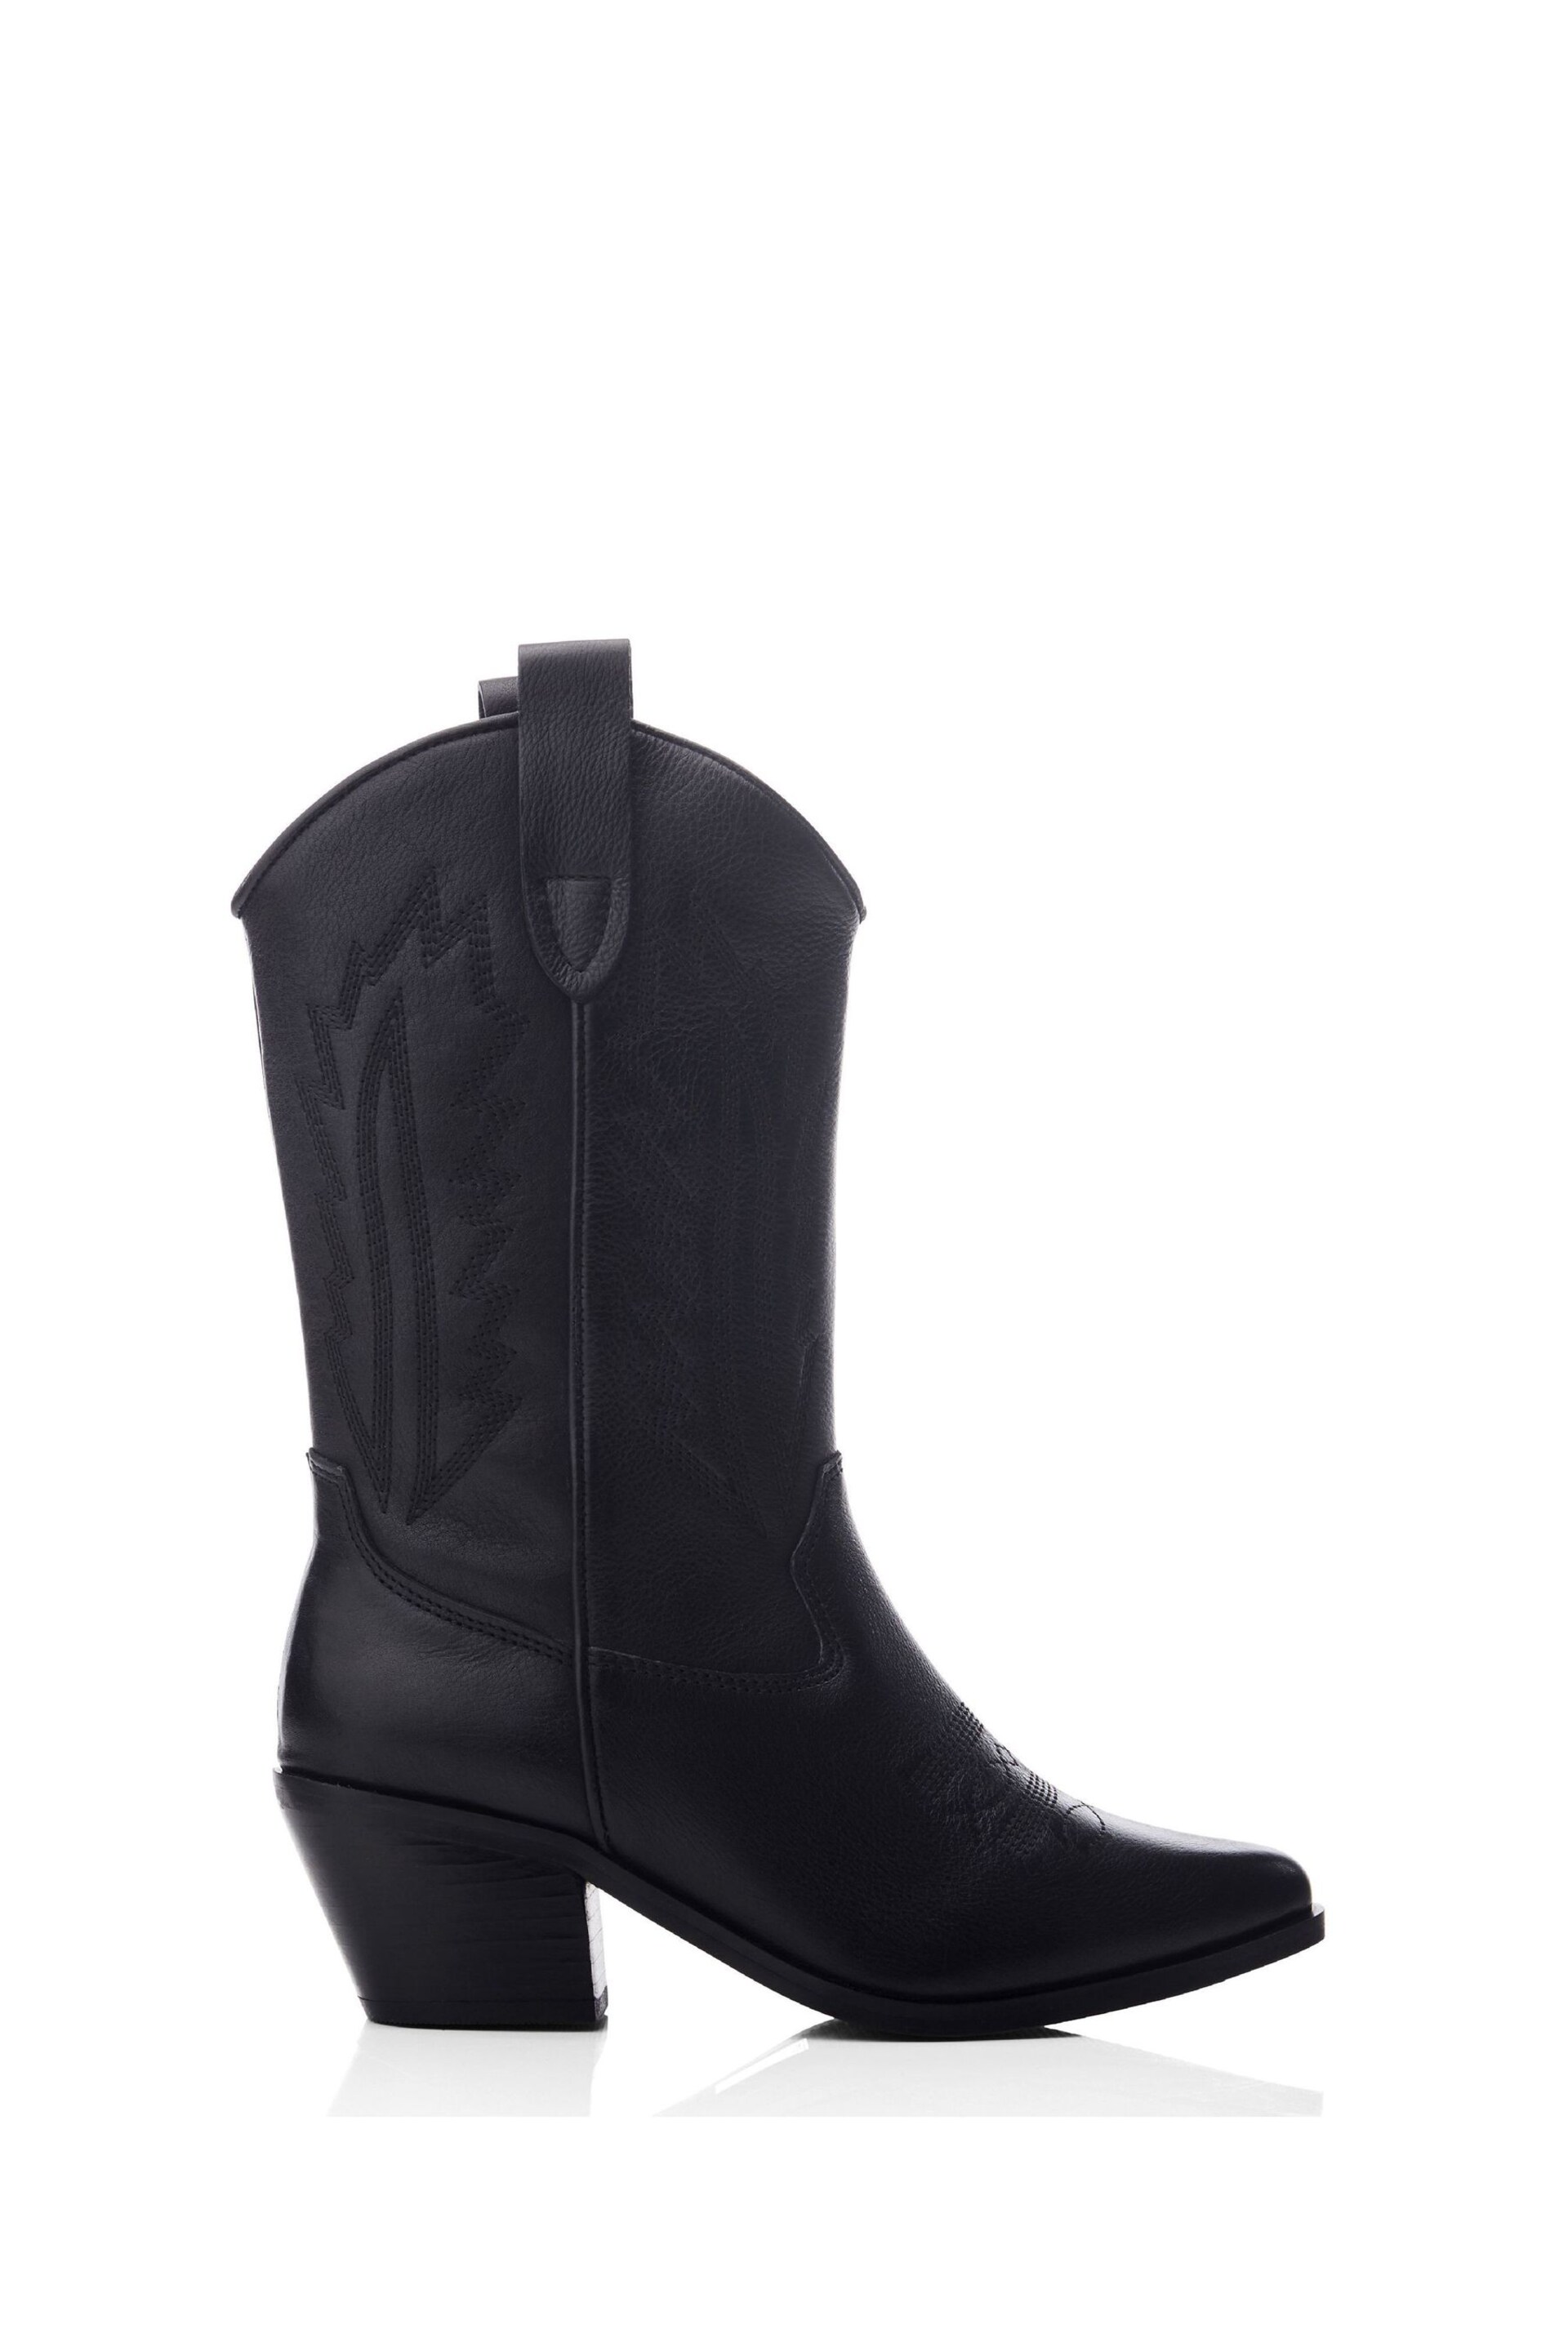 Moda in Pelle Heston Calf Height Western Black Boots - Image 1 of 4